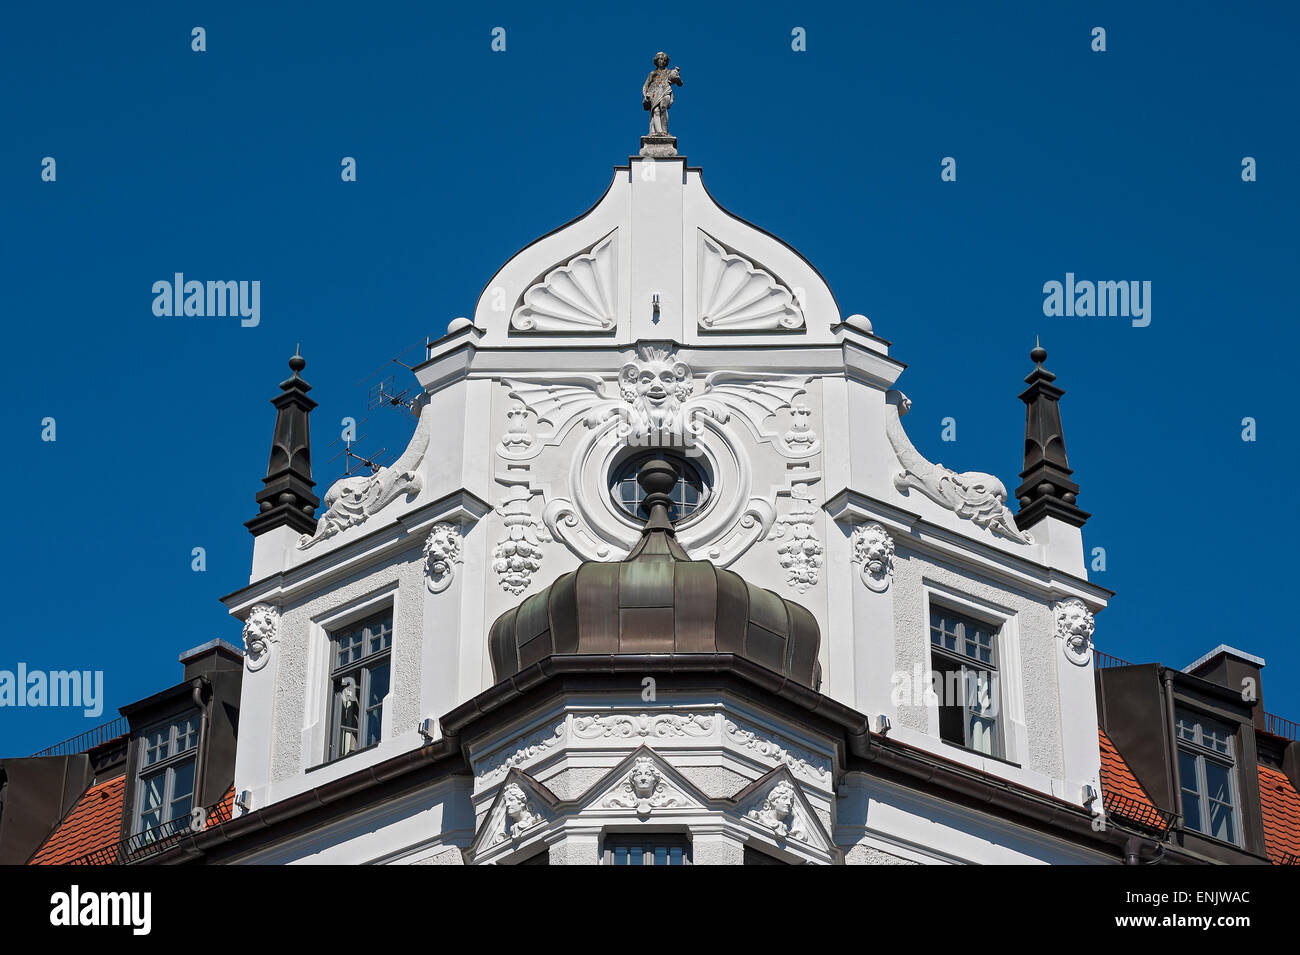 Mansion facade, Feinkost Käfer, Munich, Upper Bavaria, Bavaria, Germany Stock Photo